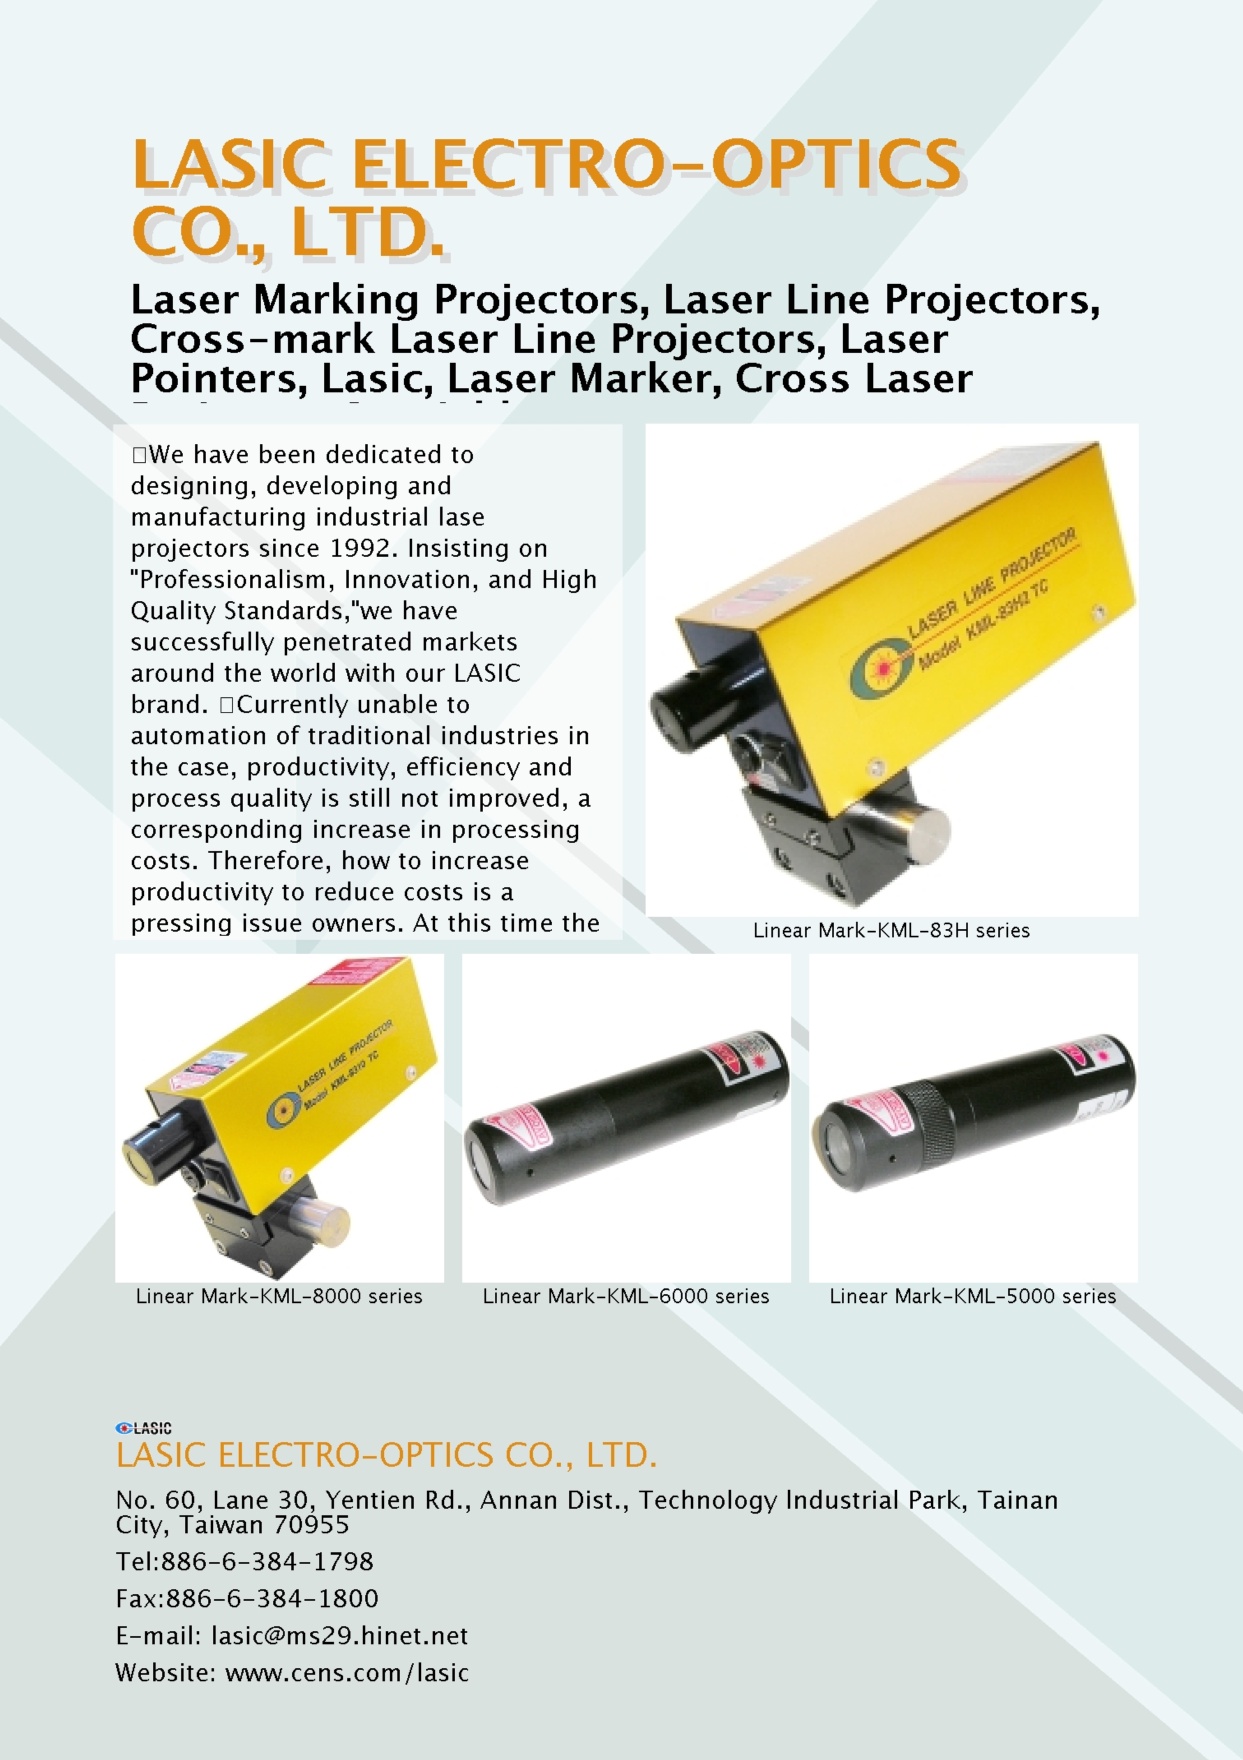 LASIC ELECTRO-OPTICS CO., LTD.